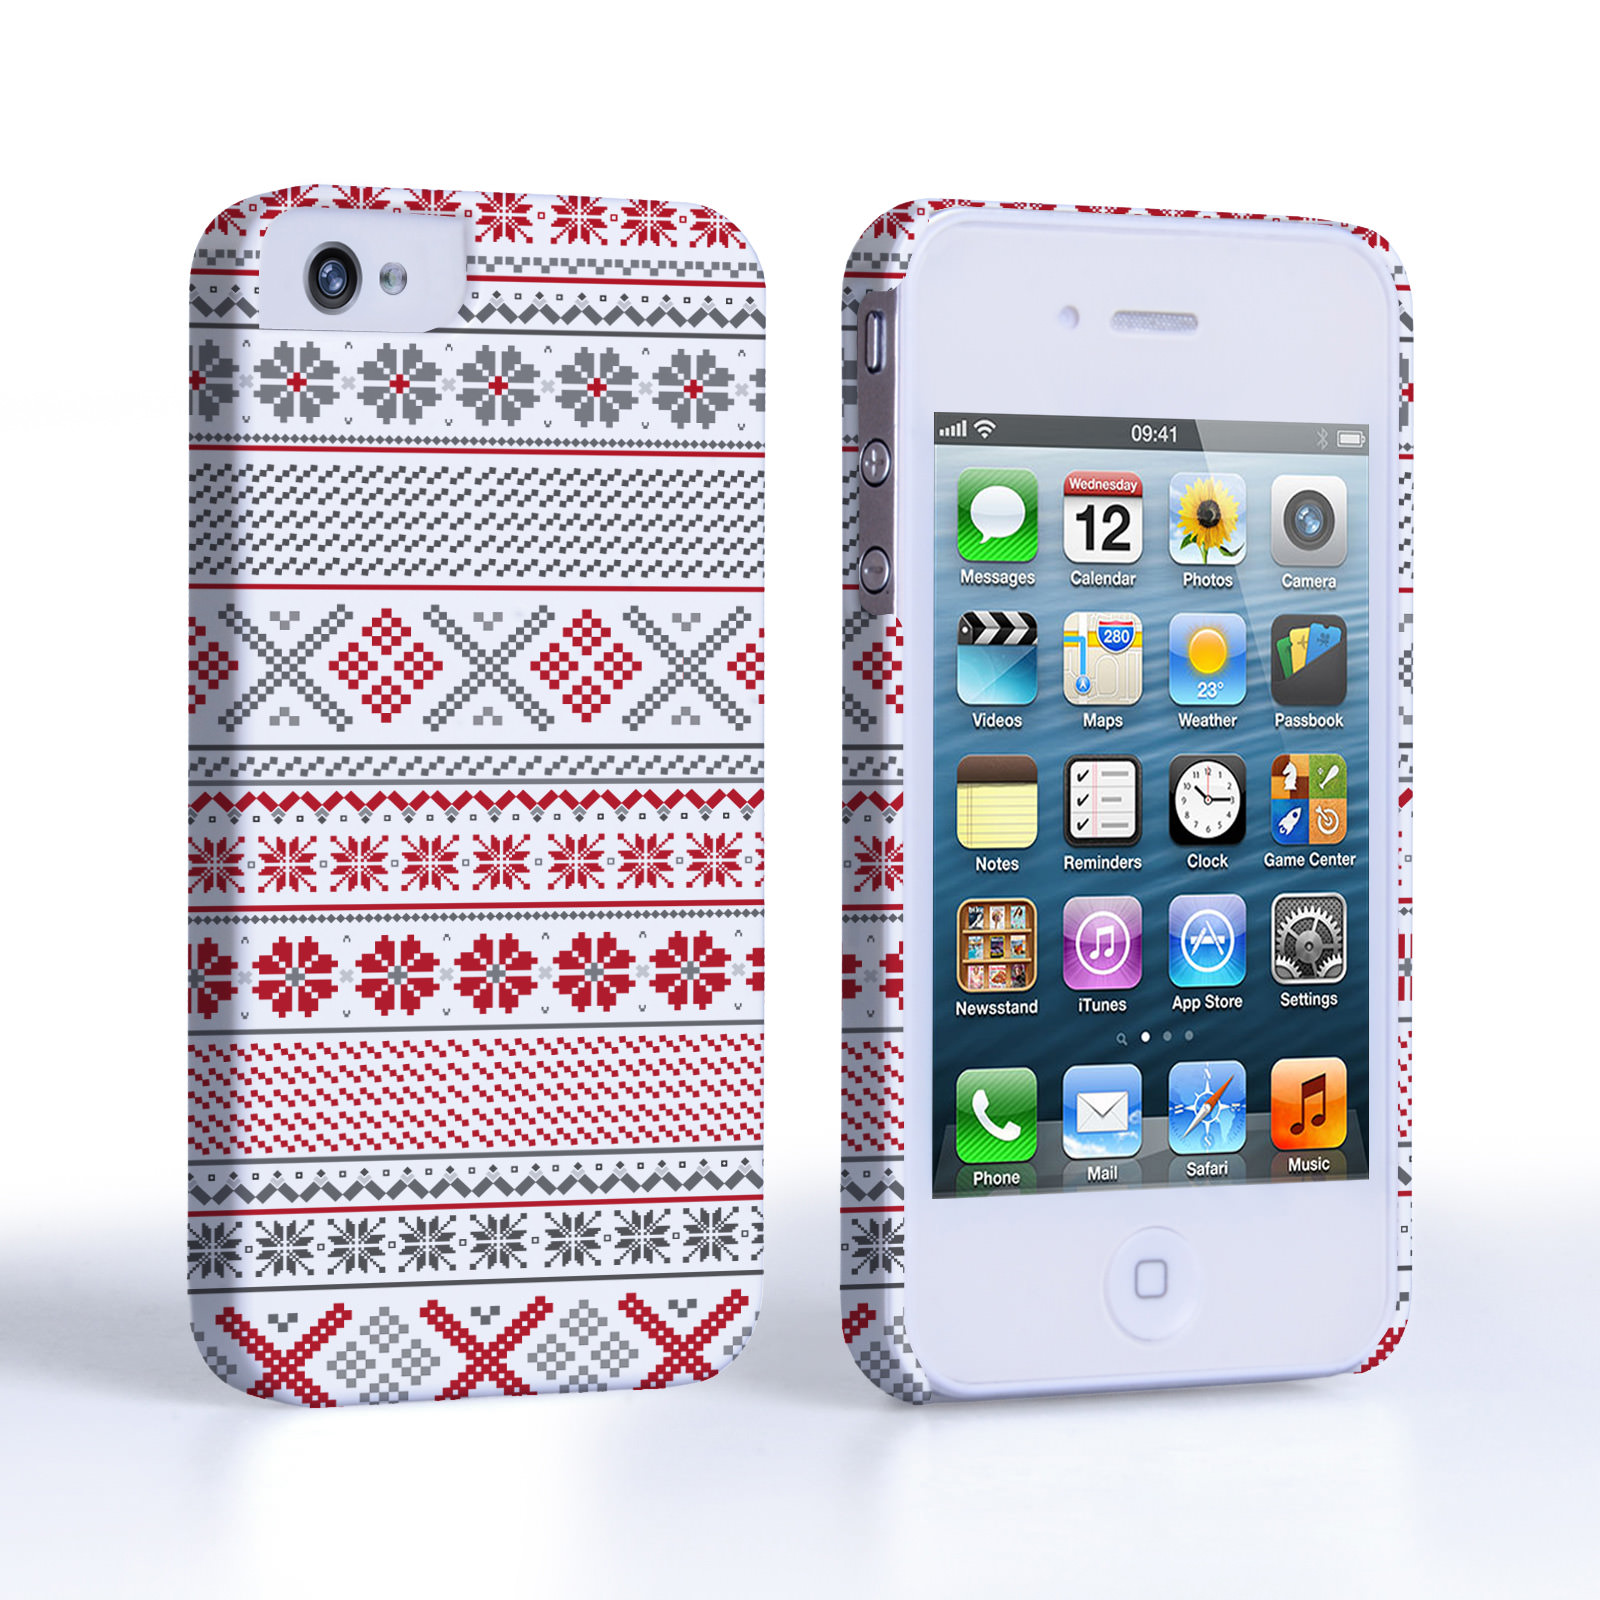 Caseflex iPhone 4/4S Fairisle Case – Red, White and Grey